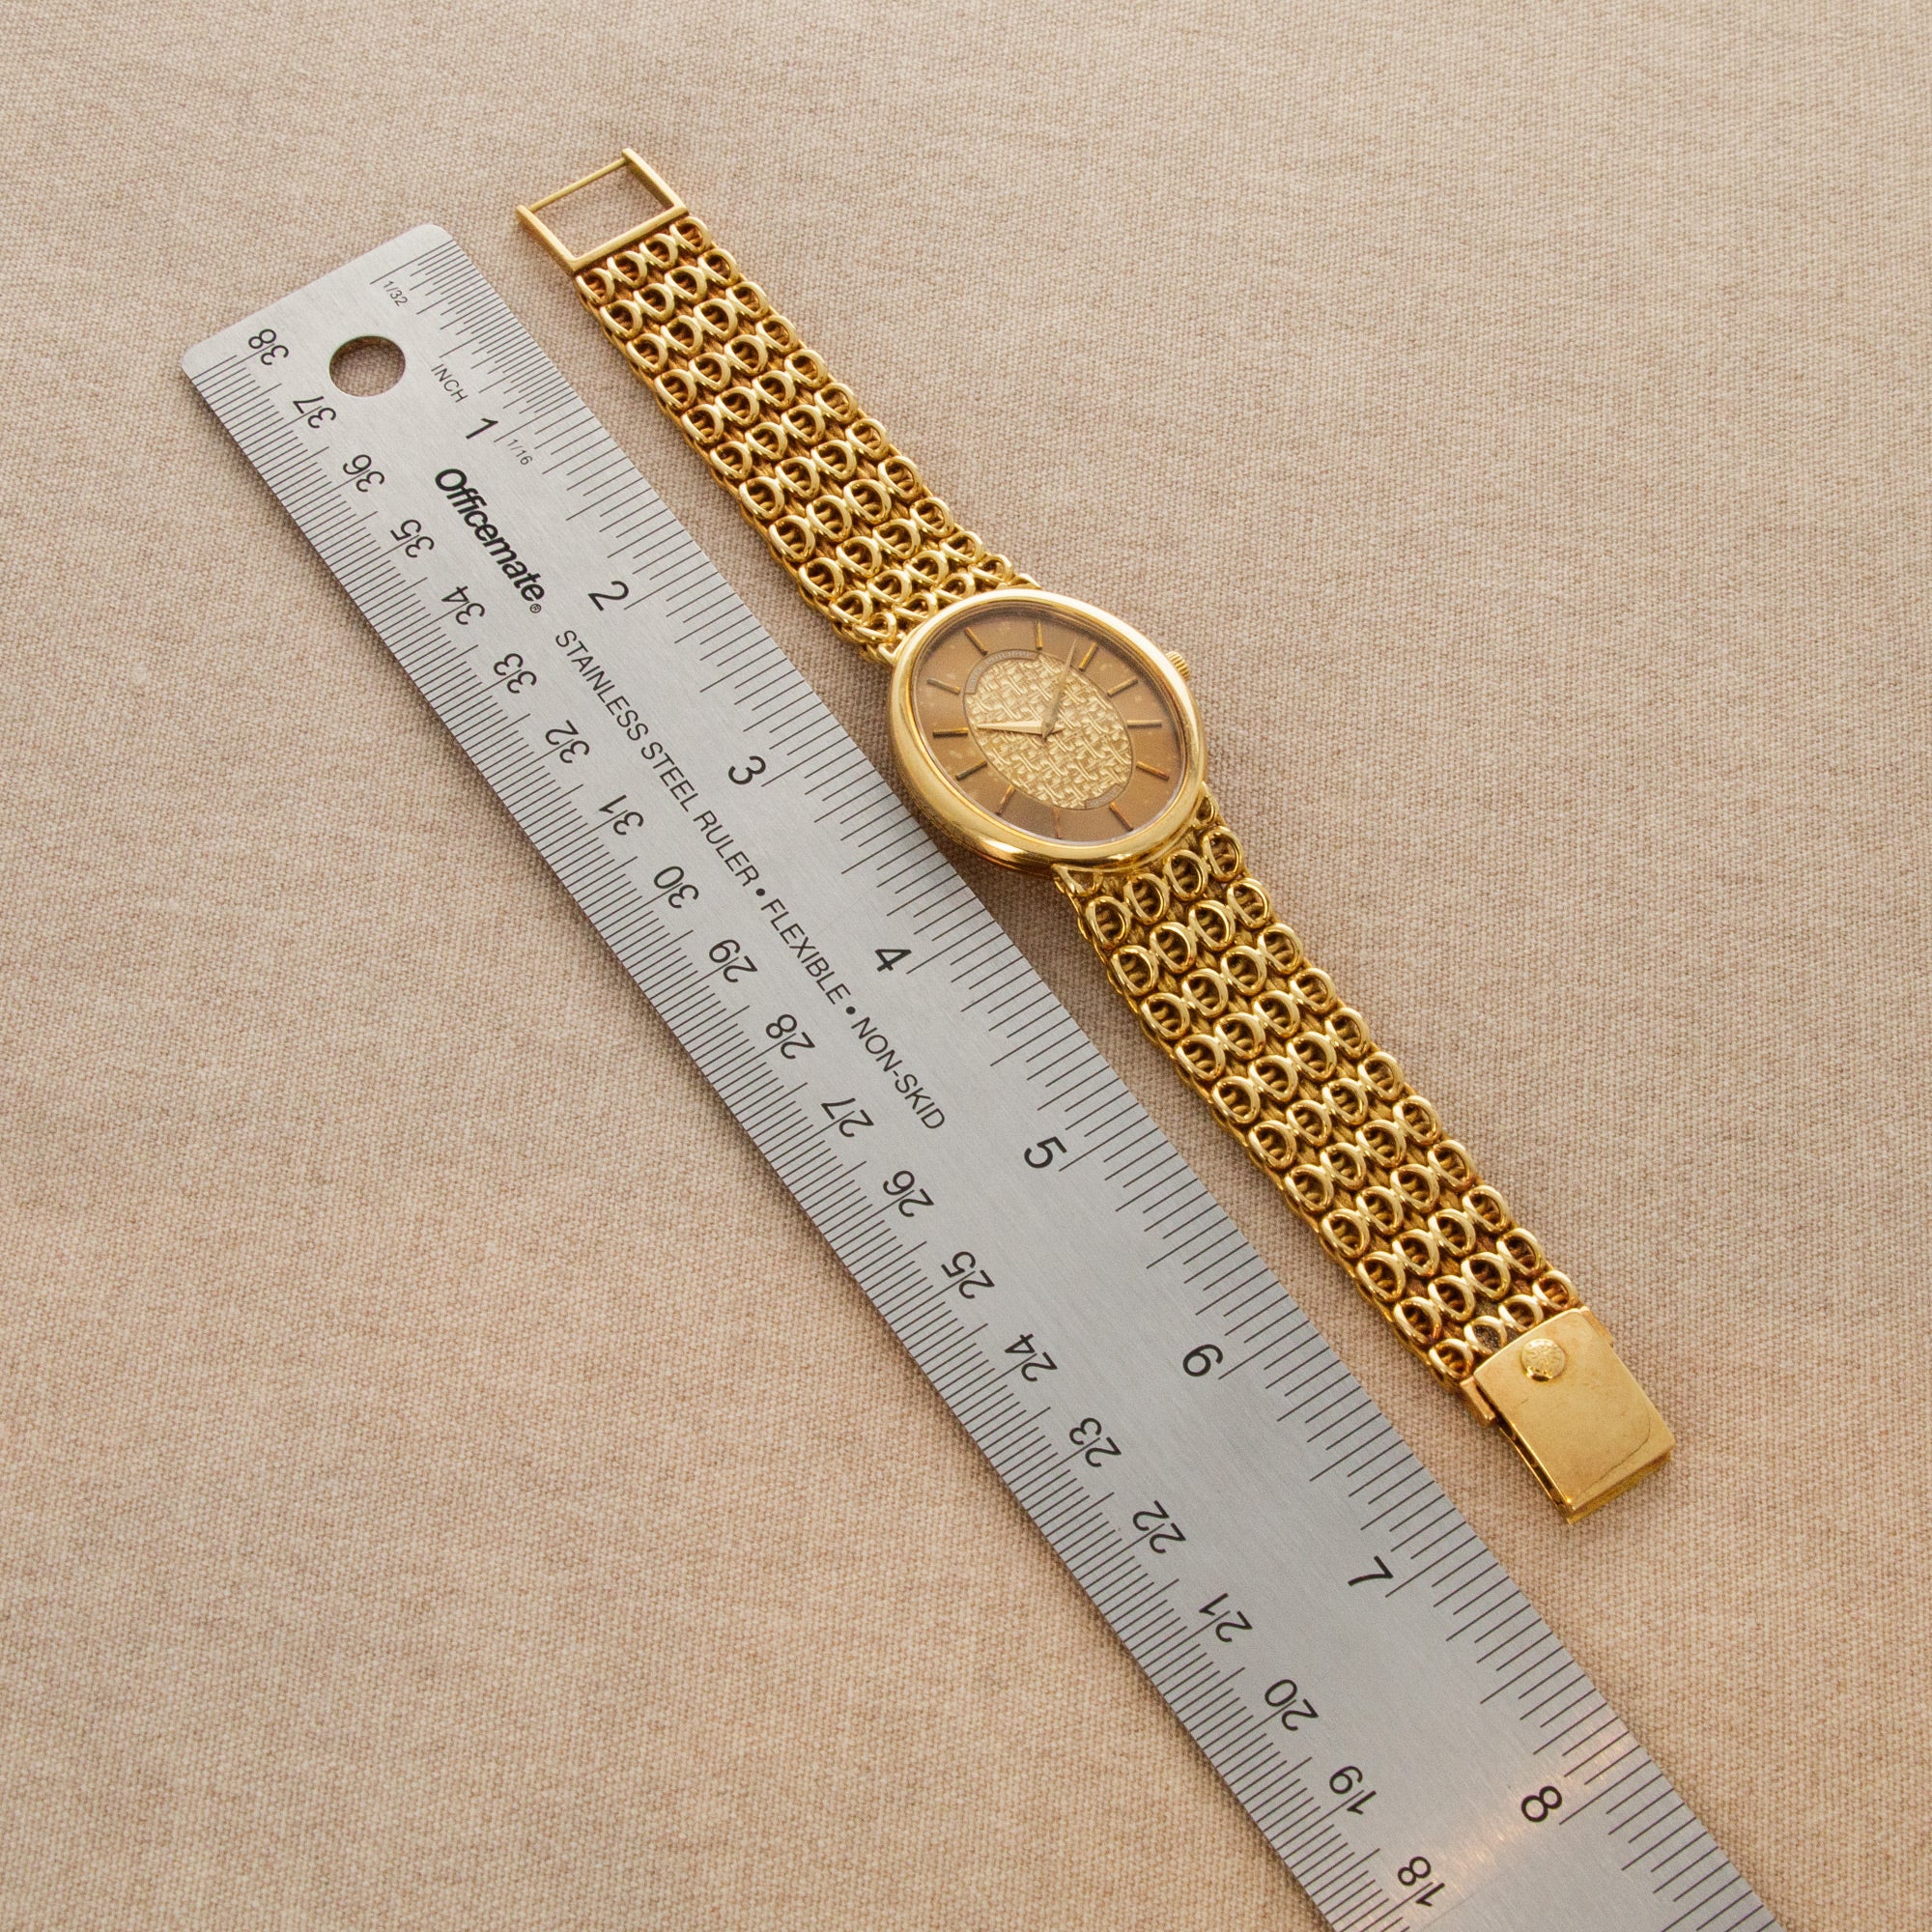 Patek Philippe Yellow Gold Bracelet Watch Ref. 3598